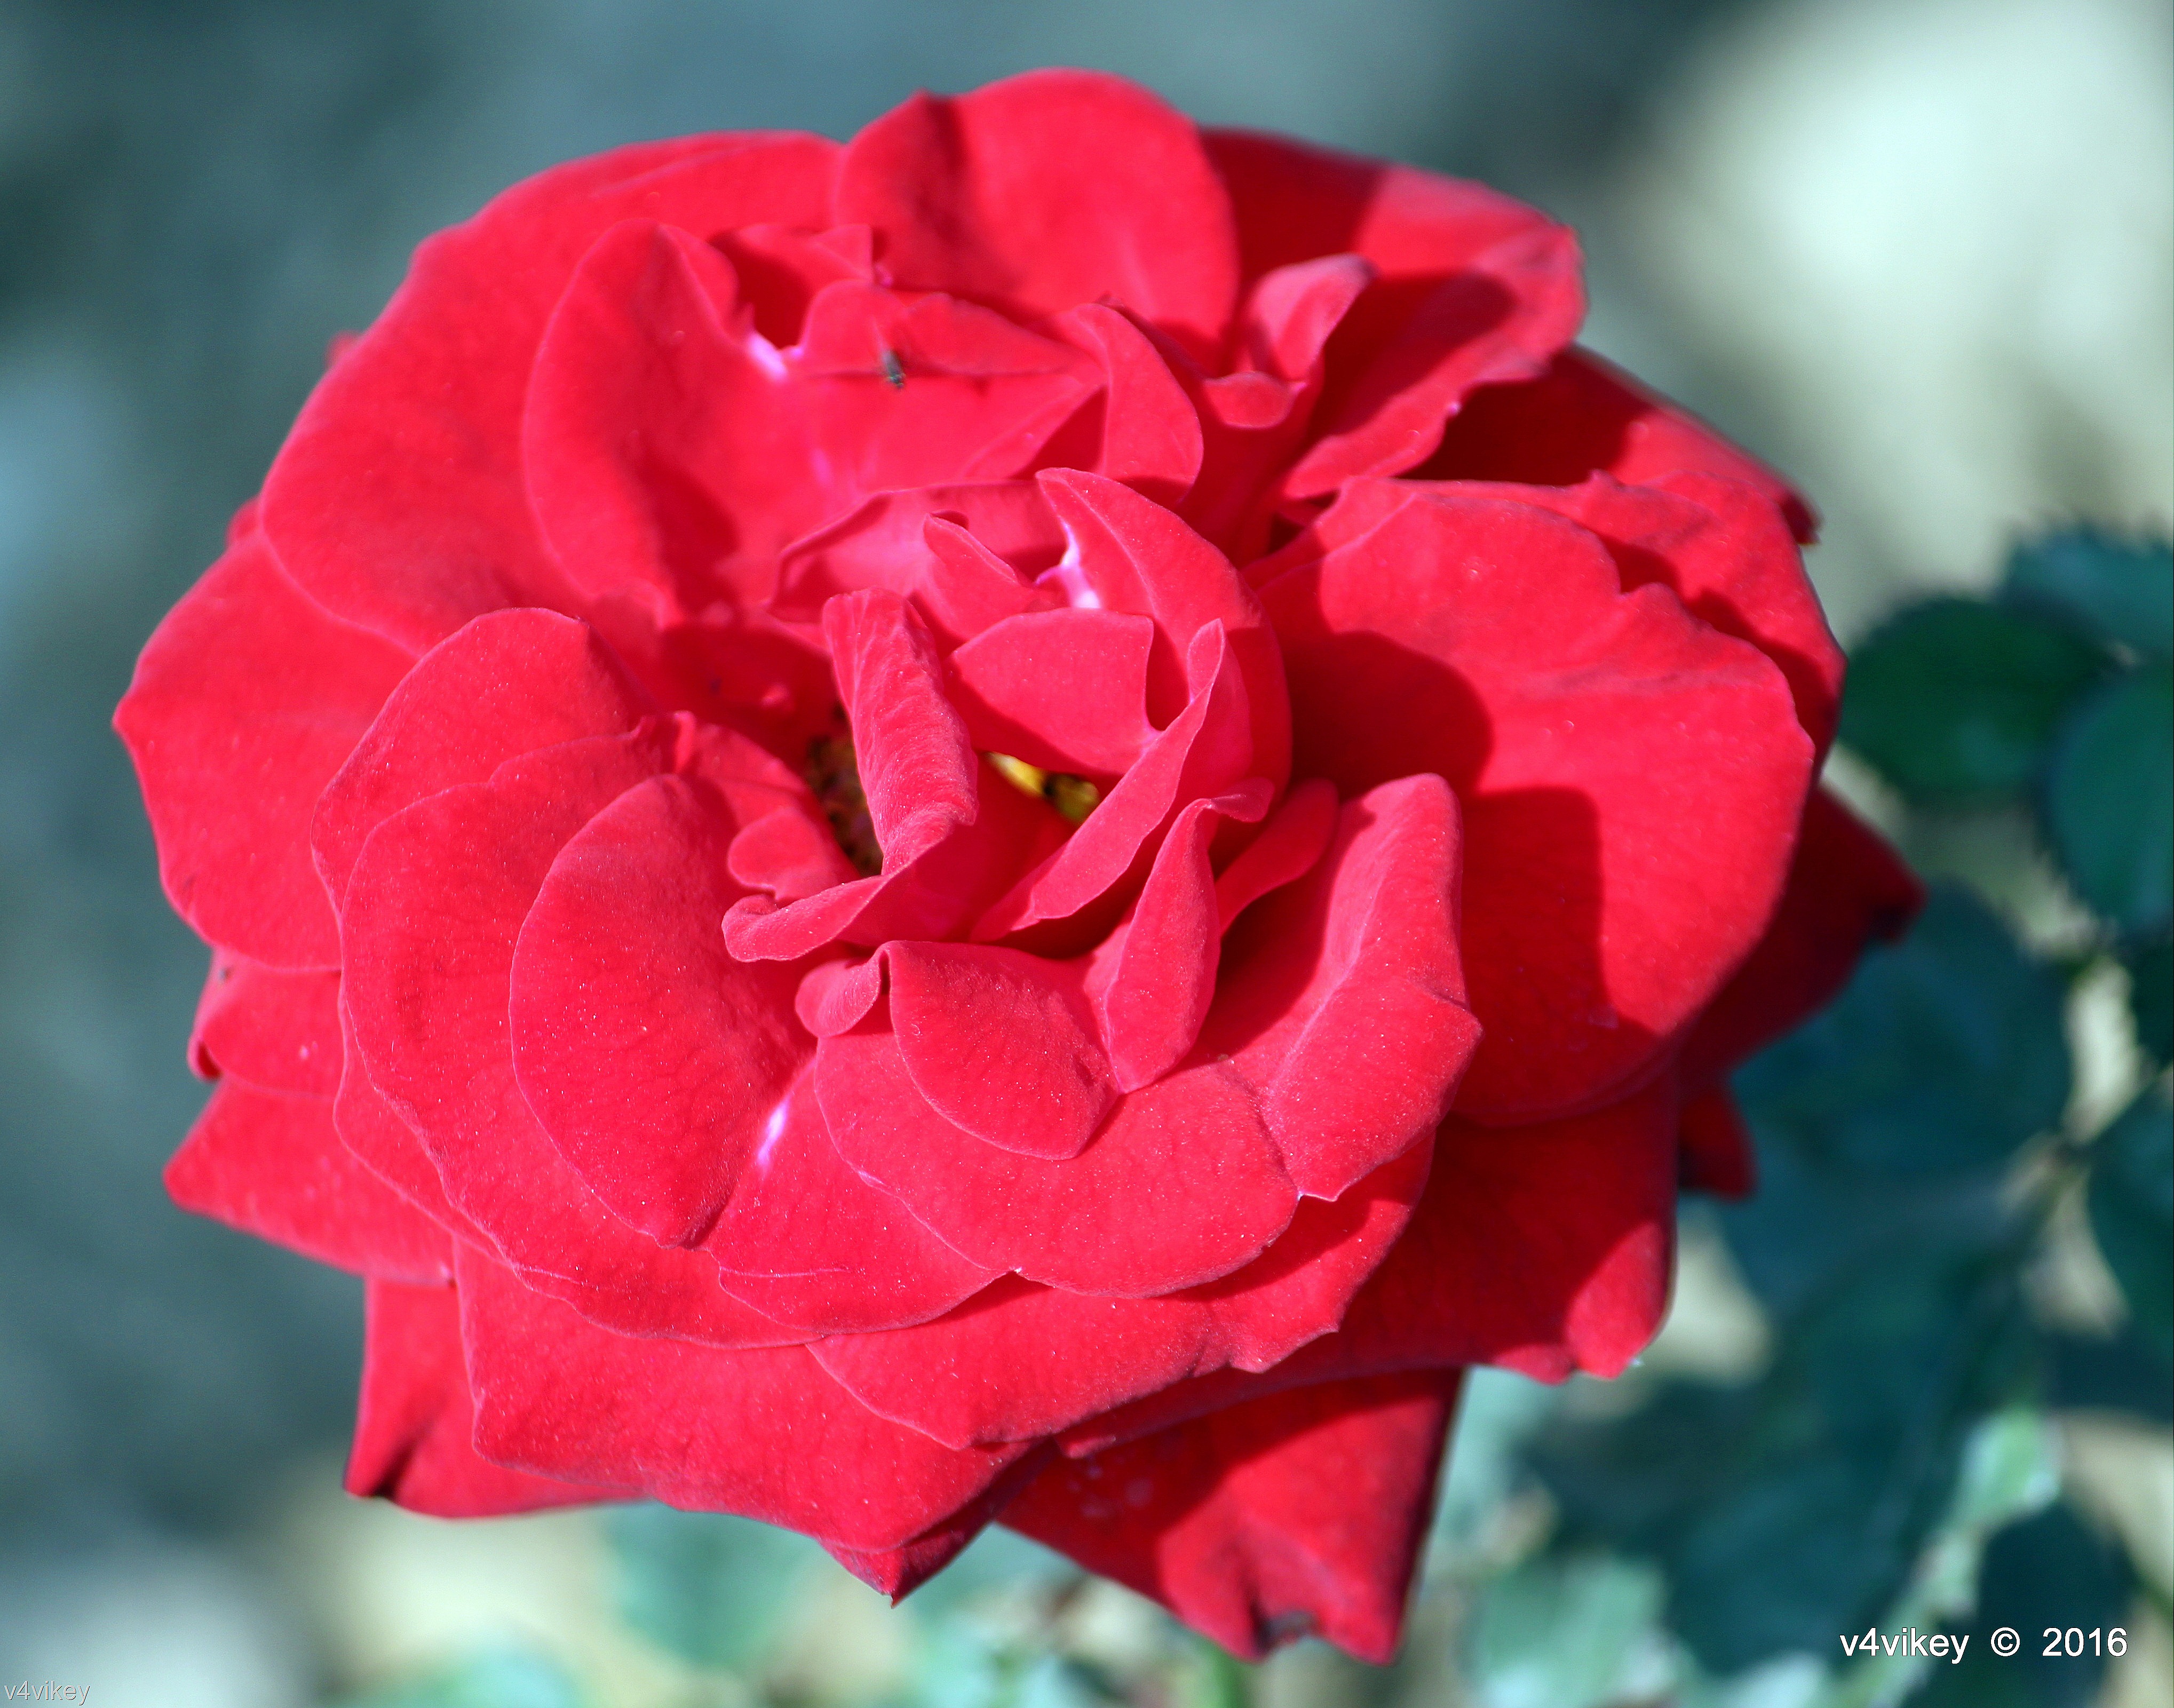 tote rosentapete,blume,blühende pflanze,blütenblatt,rot,floribunda